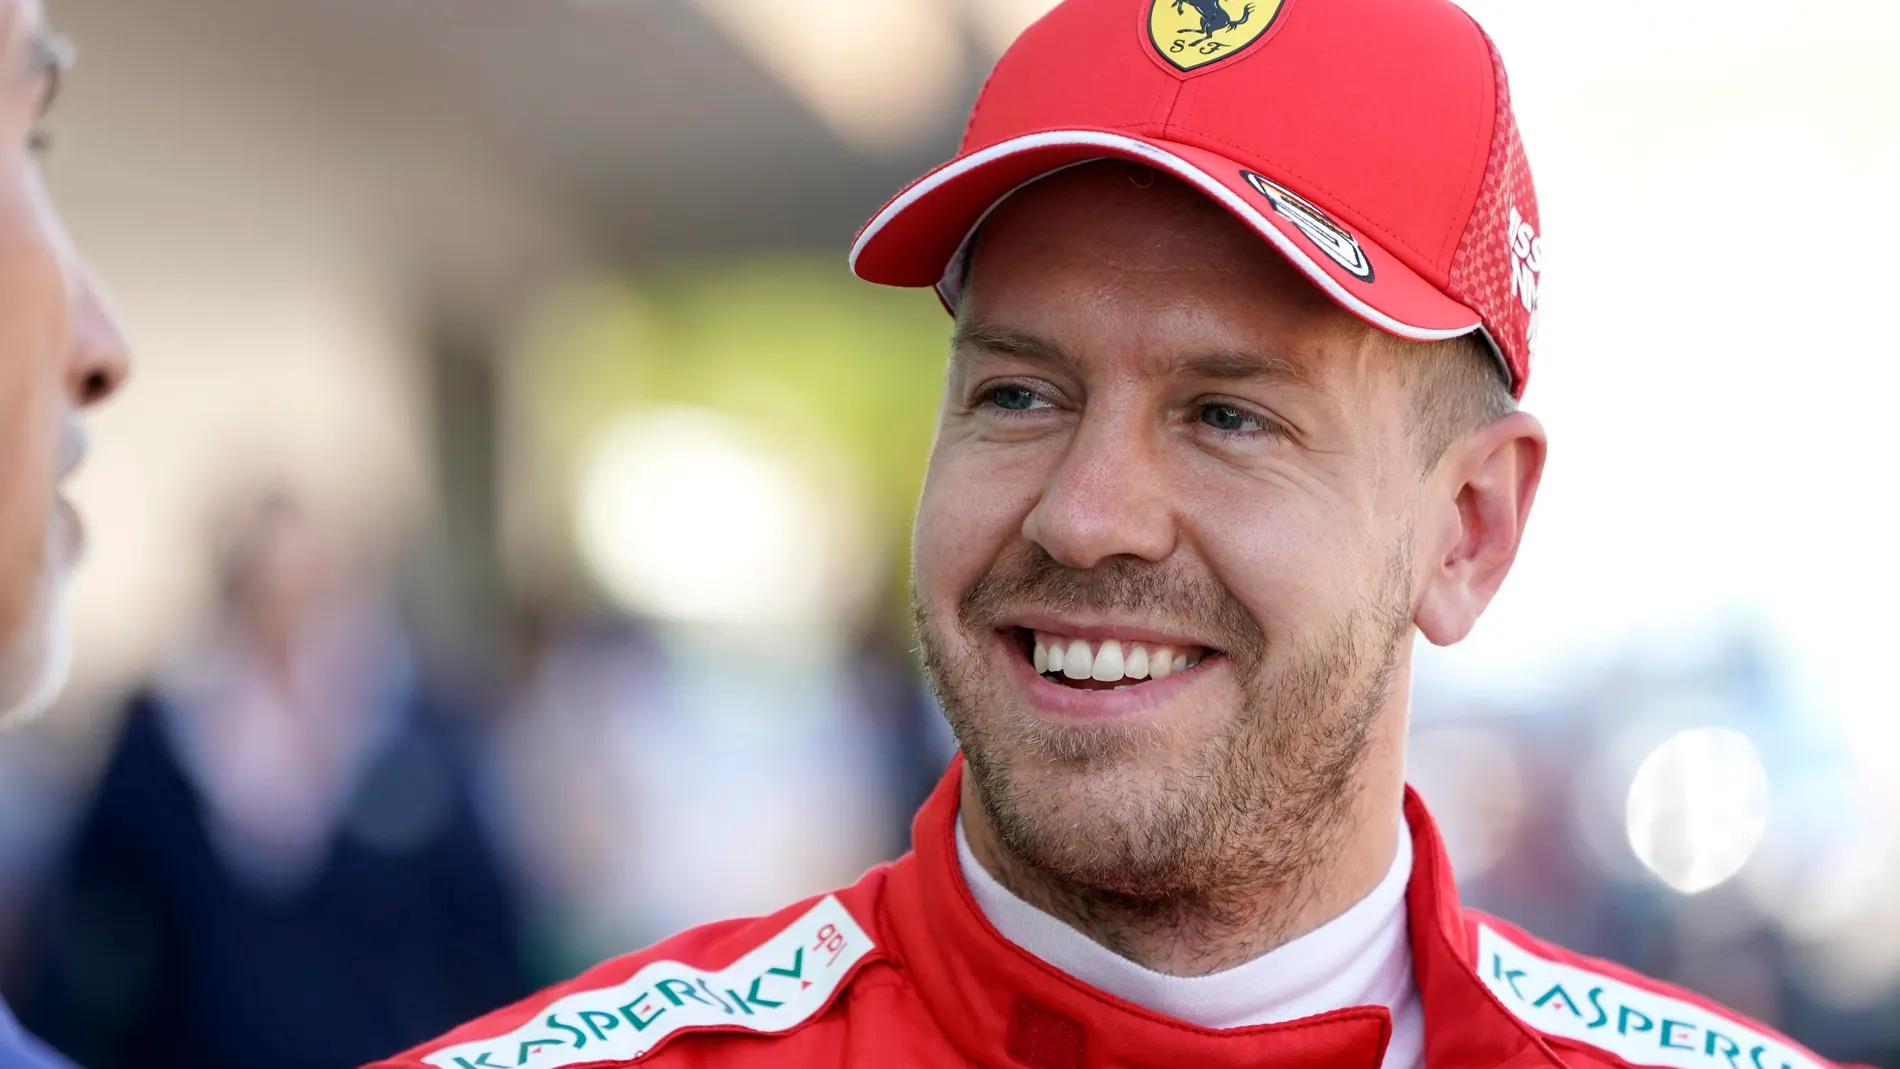 German current Ferrari driver Sebastian Vettel to start for the British factory team Aston Martin